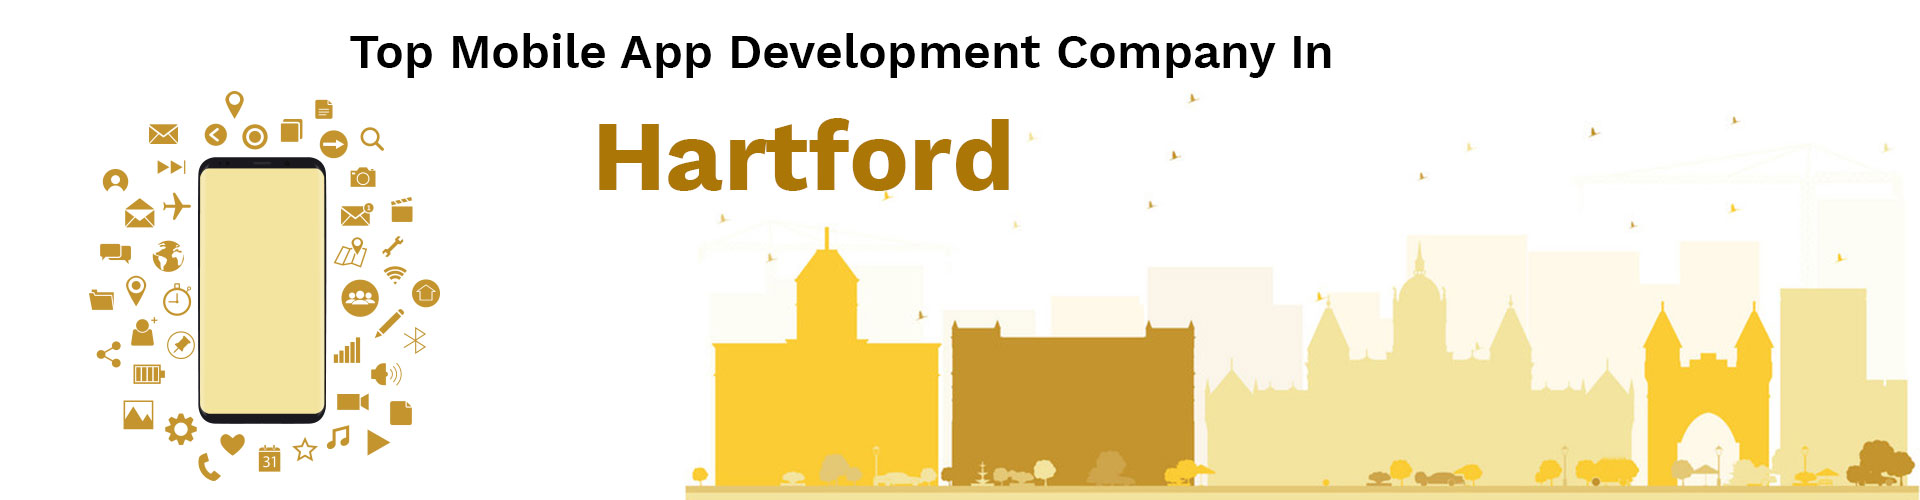 mobile app development company hartford